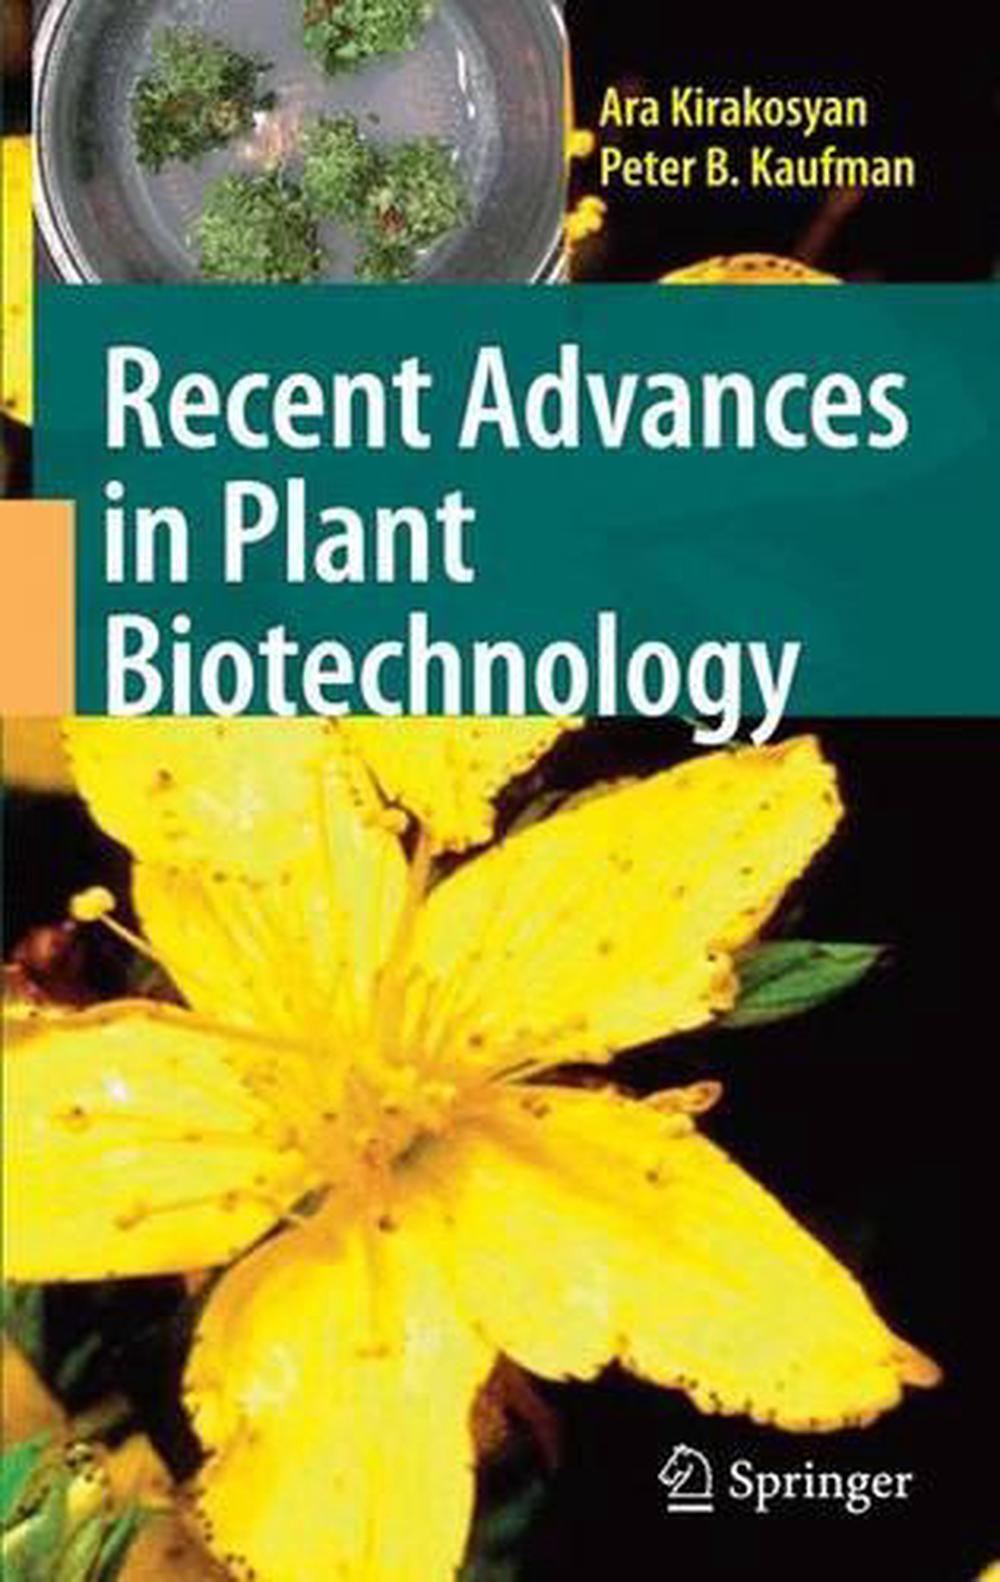 dissertation topics in plant biotechnology